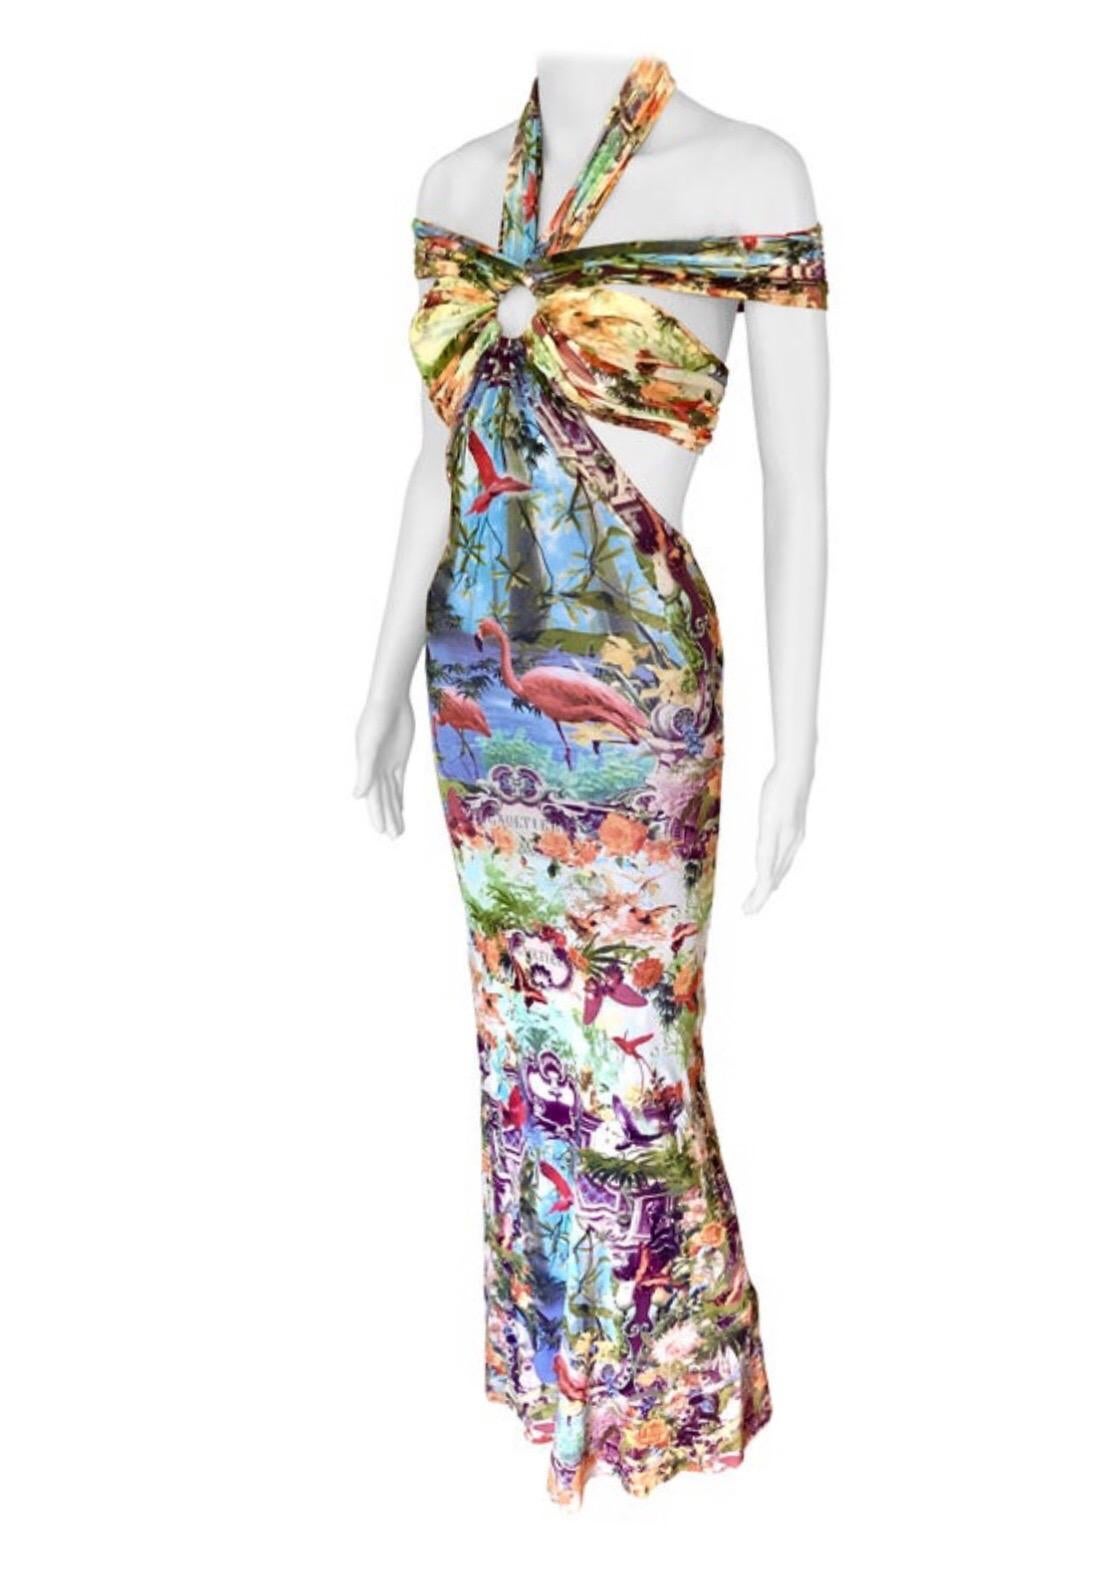 Jean Paul Gaultier Soleil S/S 1999 Flamingo Tropical Print Cutout Mesh Bodycon Maxi Dress Size S